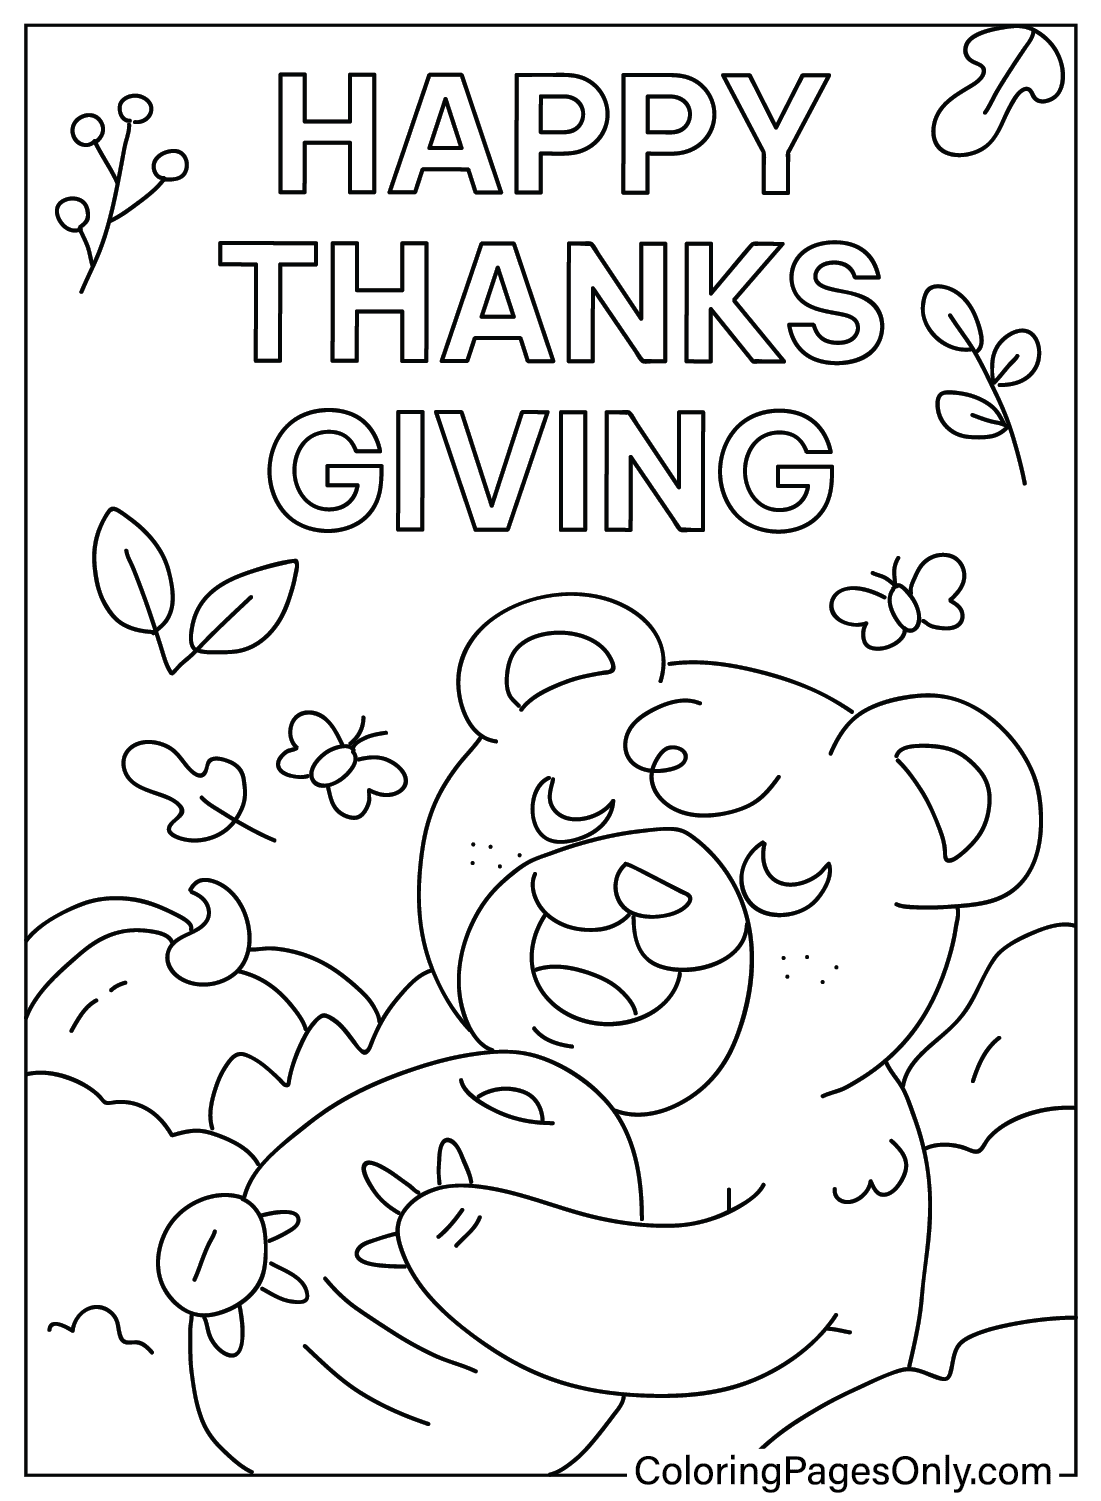 Kleurplaten voor Thanksgiving from Thanksgiving